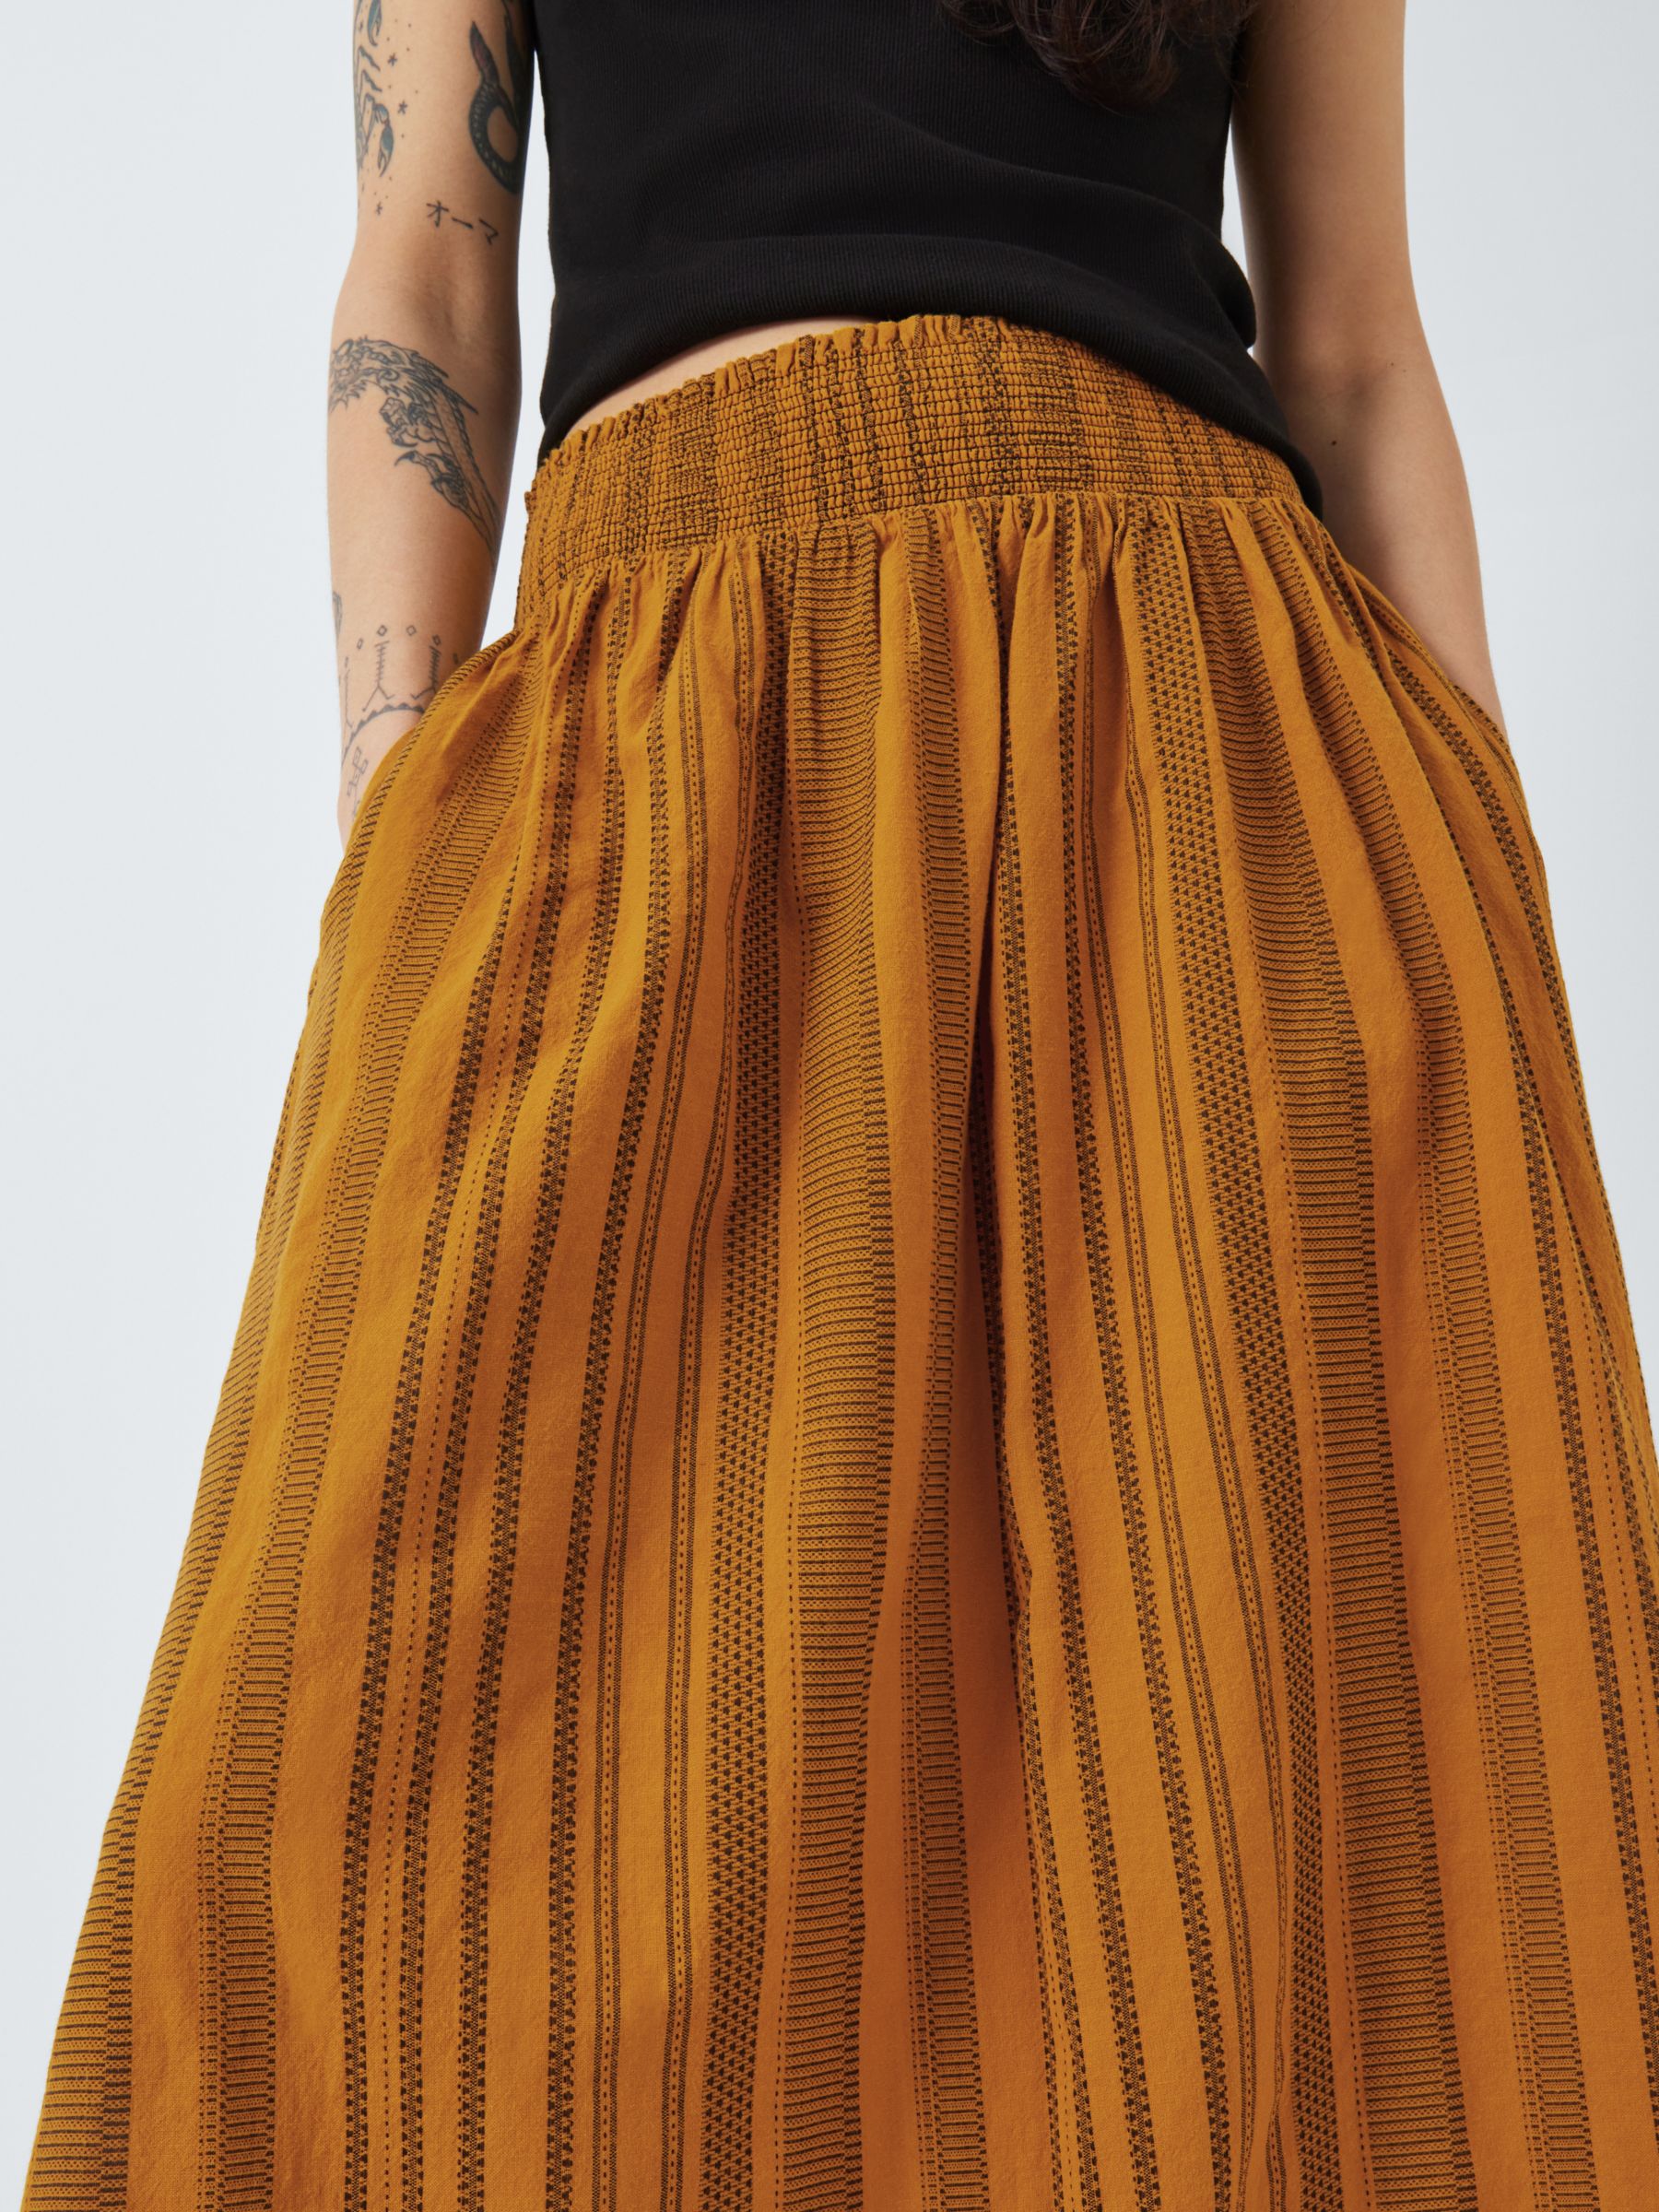 AND/OR Phoenix Jacquard Stripe Skirt, Yellow, 18